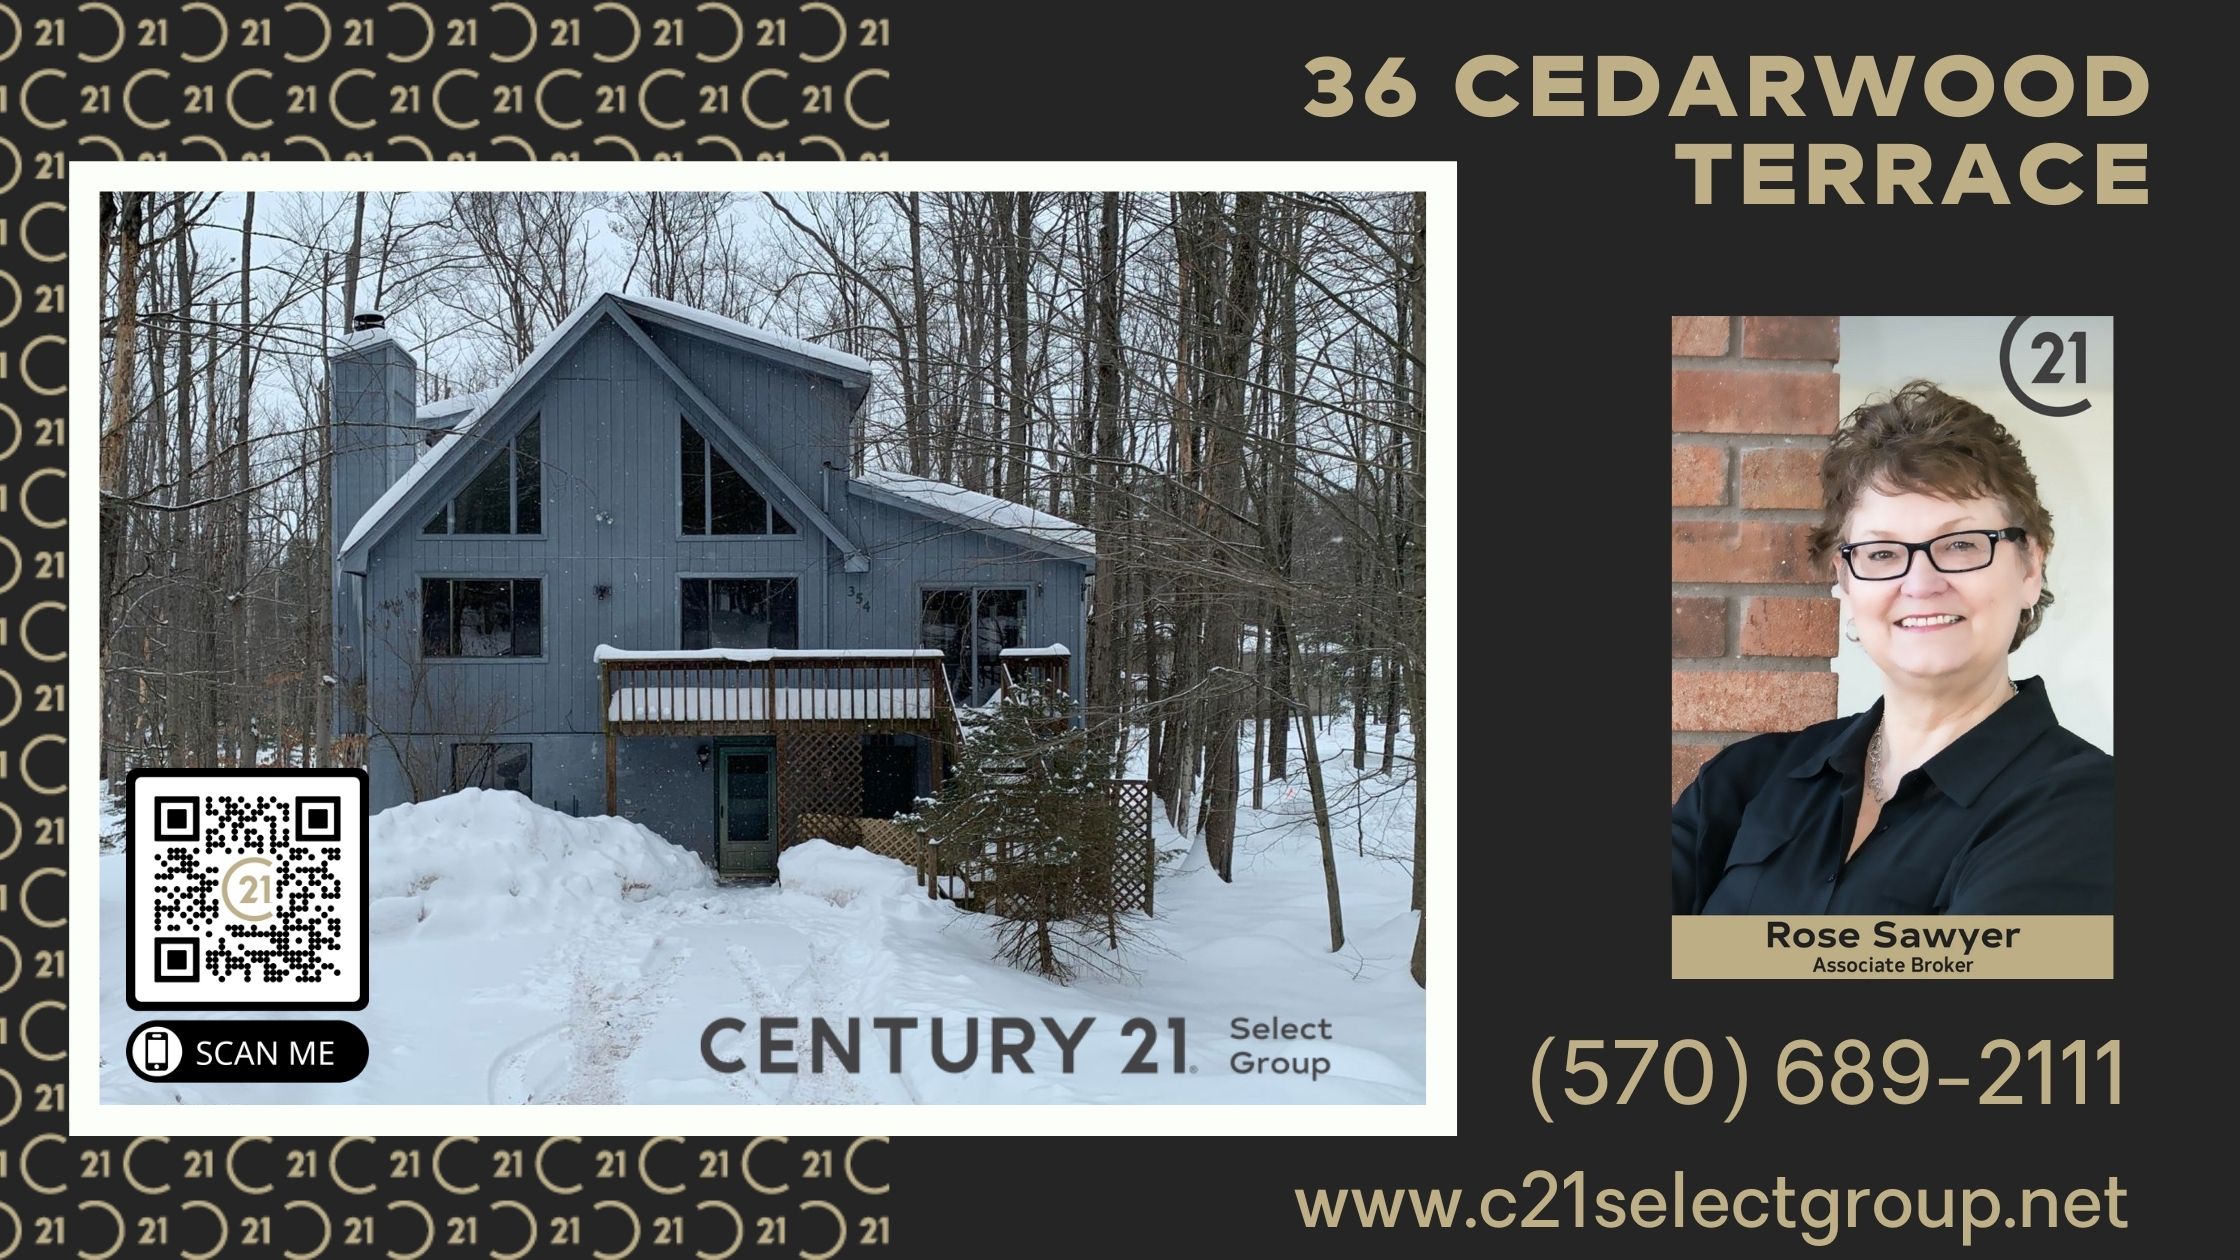 36 Cedarwood Terrace: Hideout Community Chalet